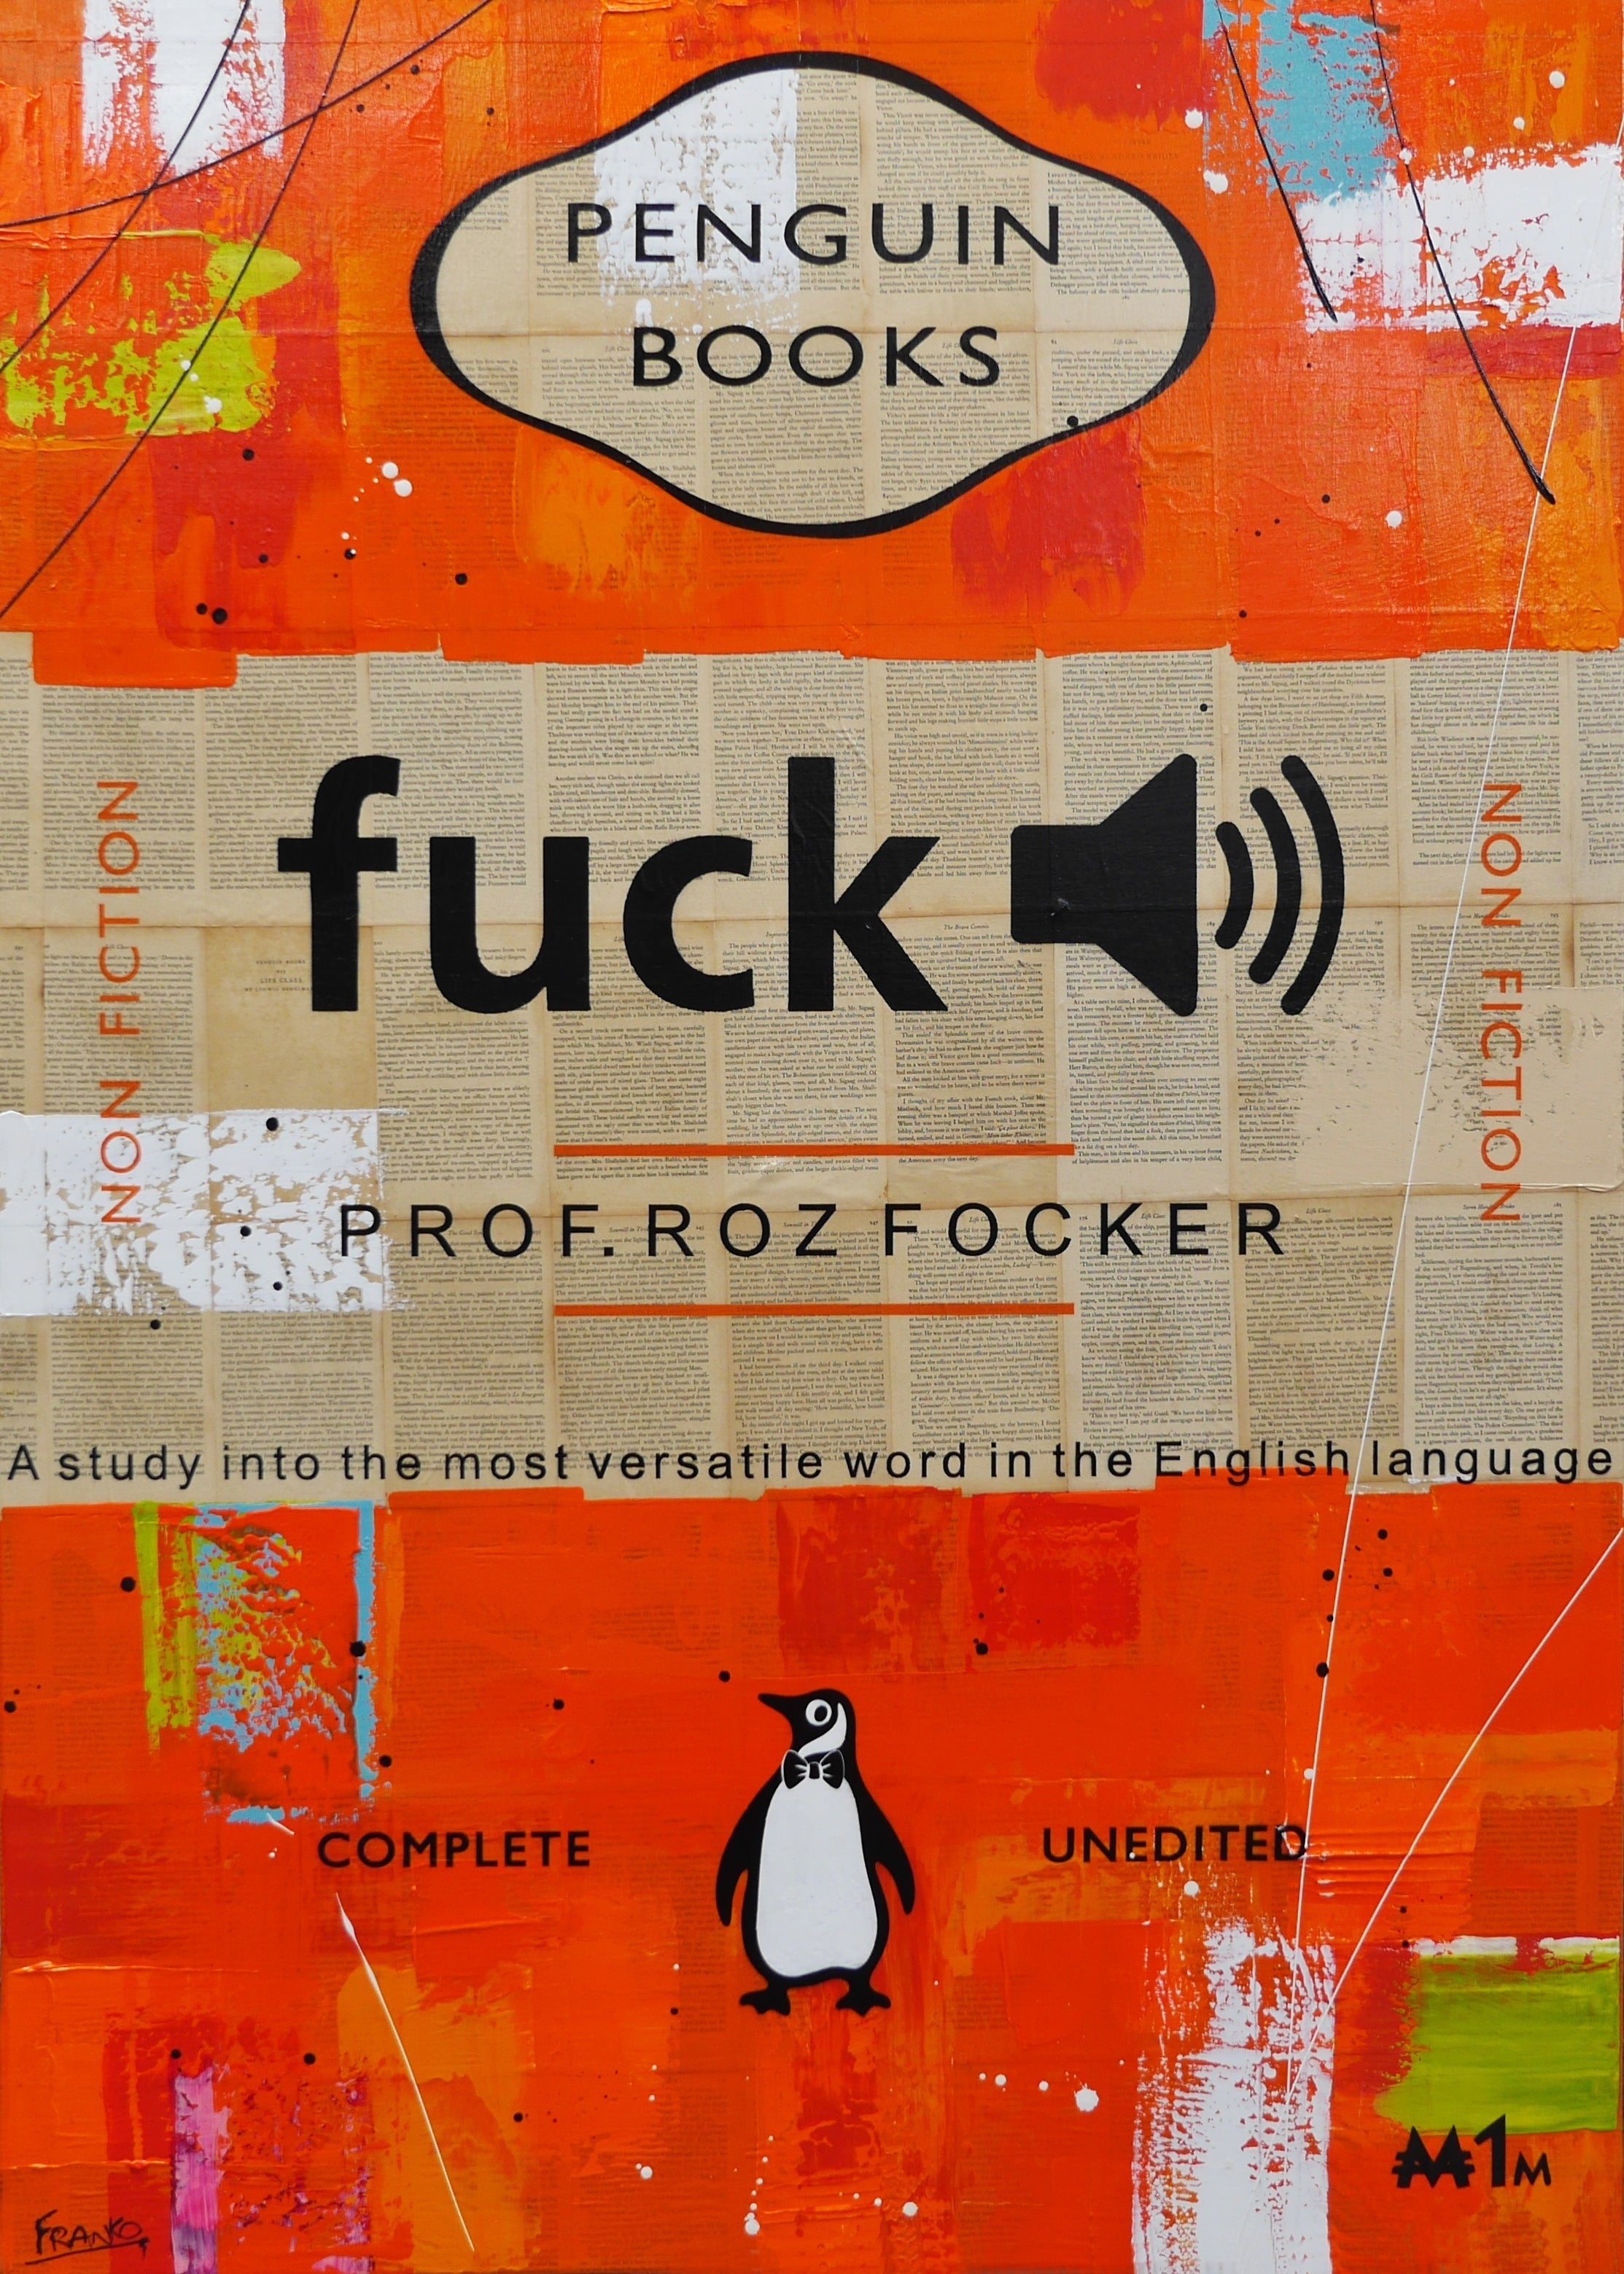 That Word 140cm x 100cm Fuck Urban Pop Book Club Painting